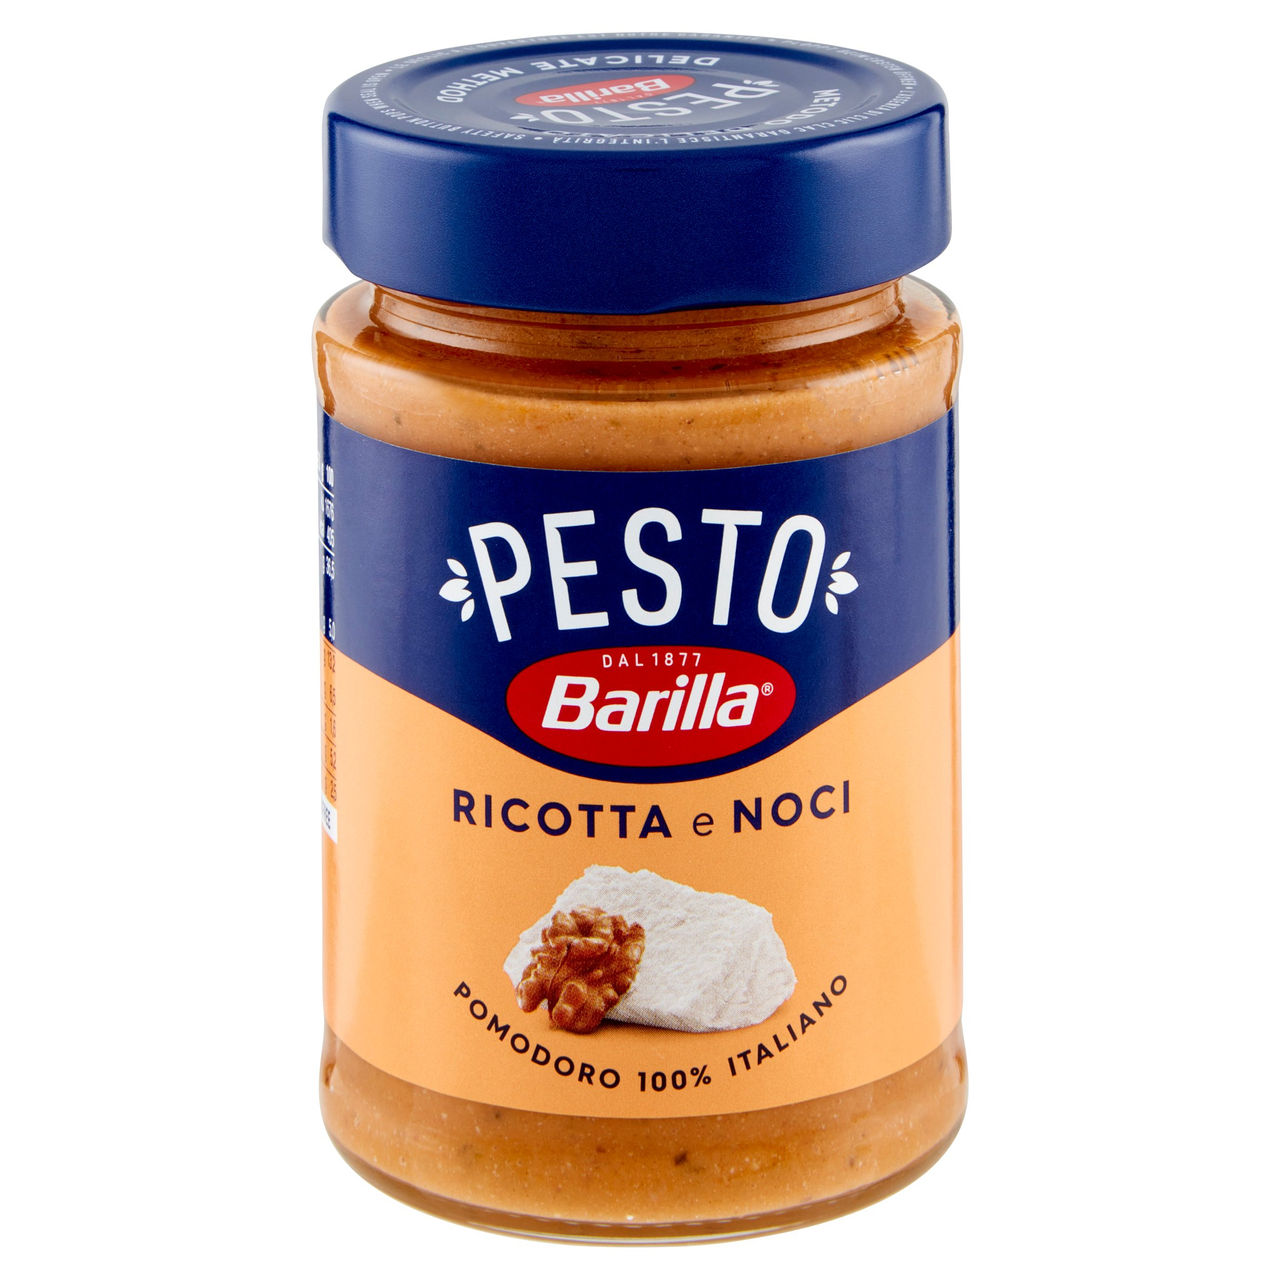 Barilla Pesto Ricotta e Noci 190g